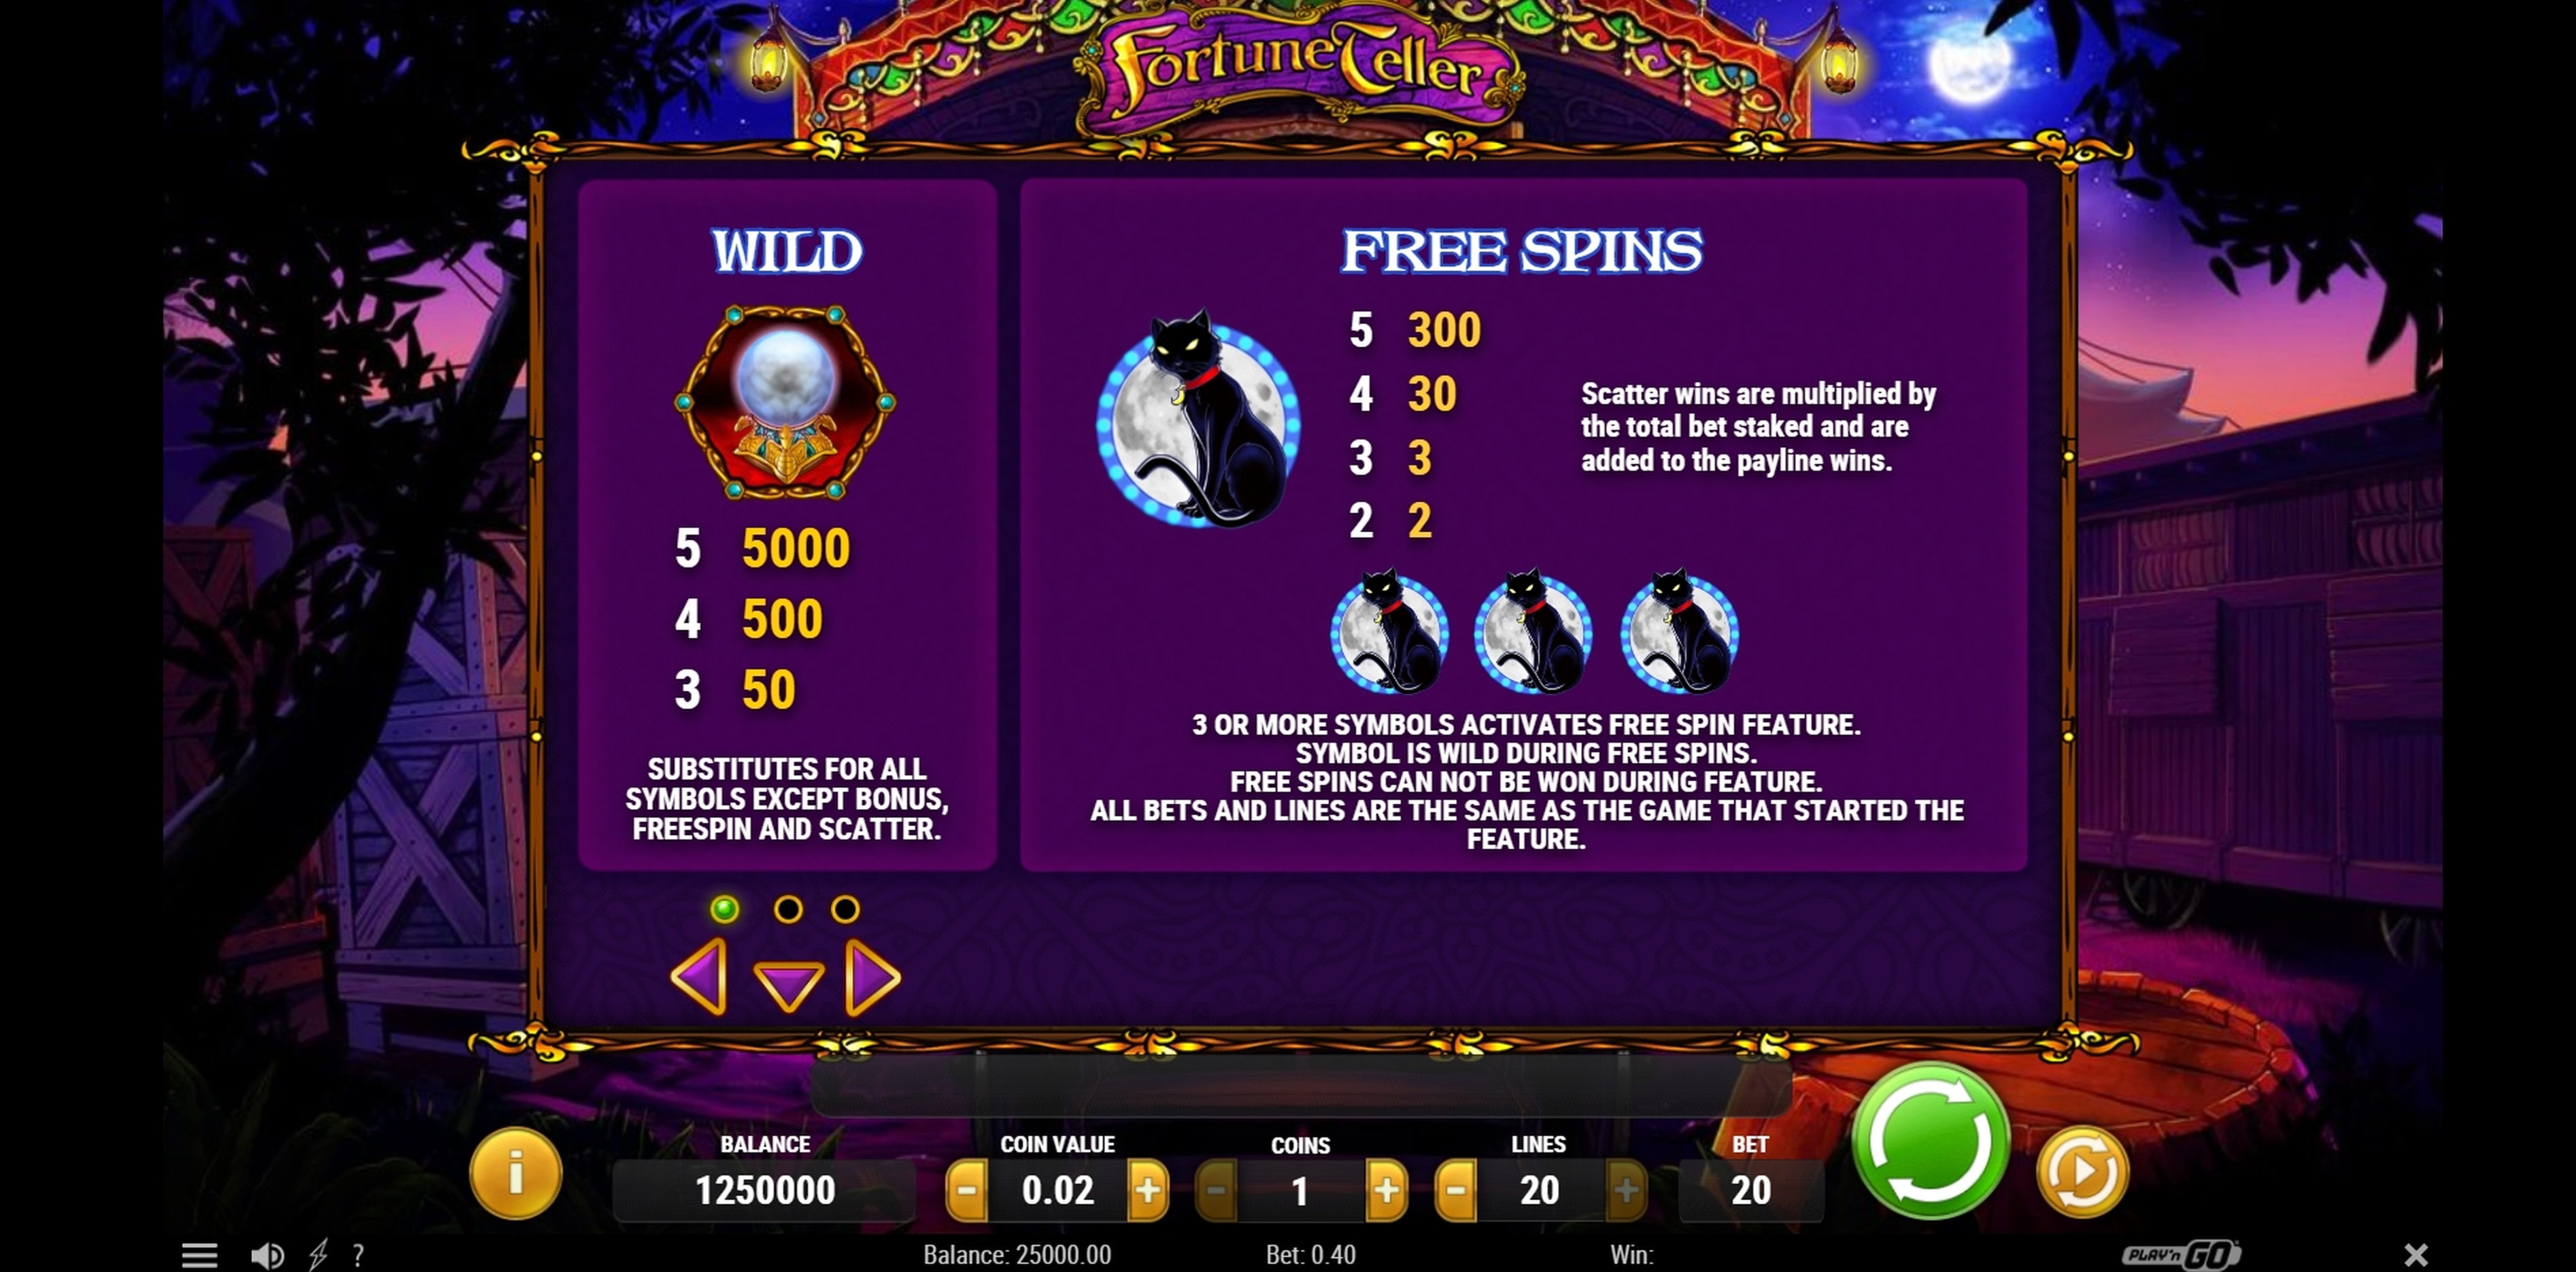 Info of Fortune Teller Slot Game by Playn GO